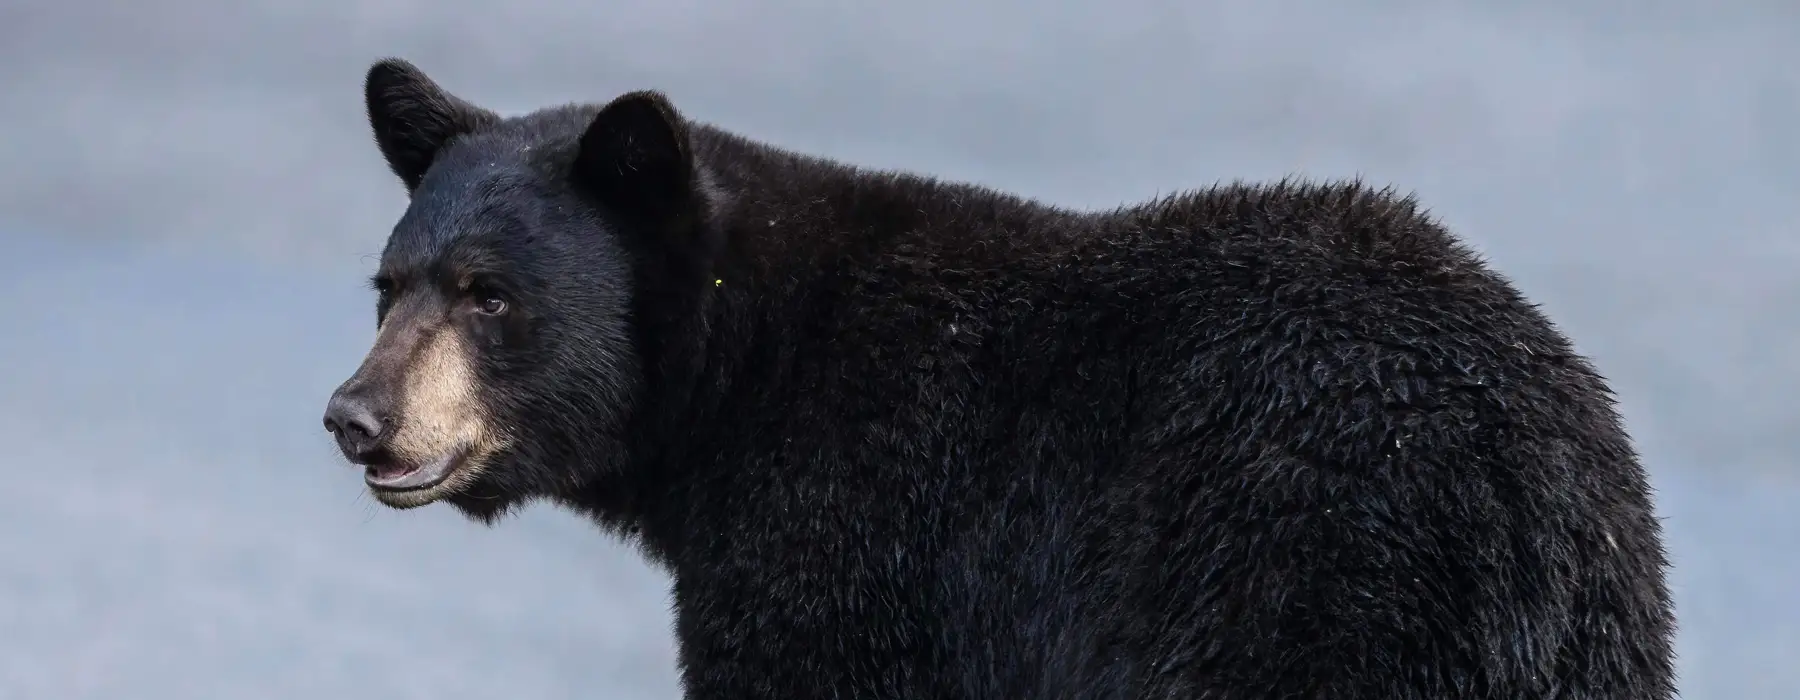 Closeup of a Black Bear